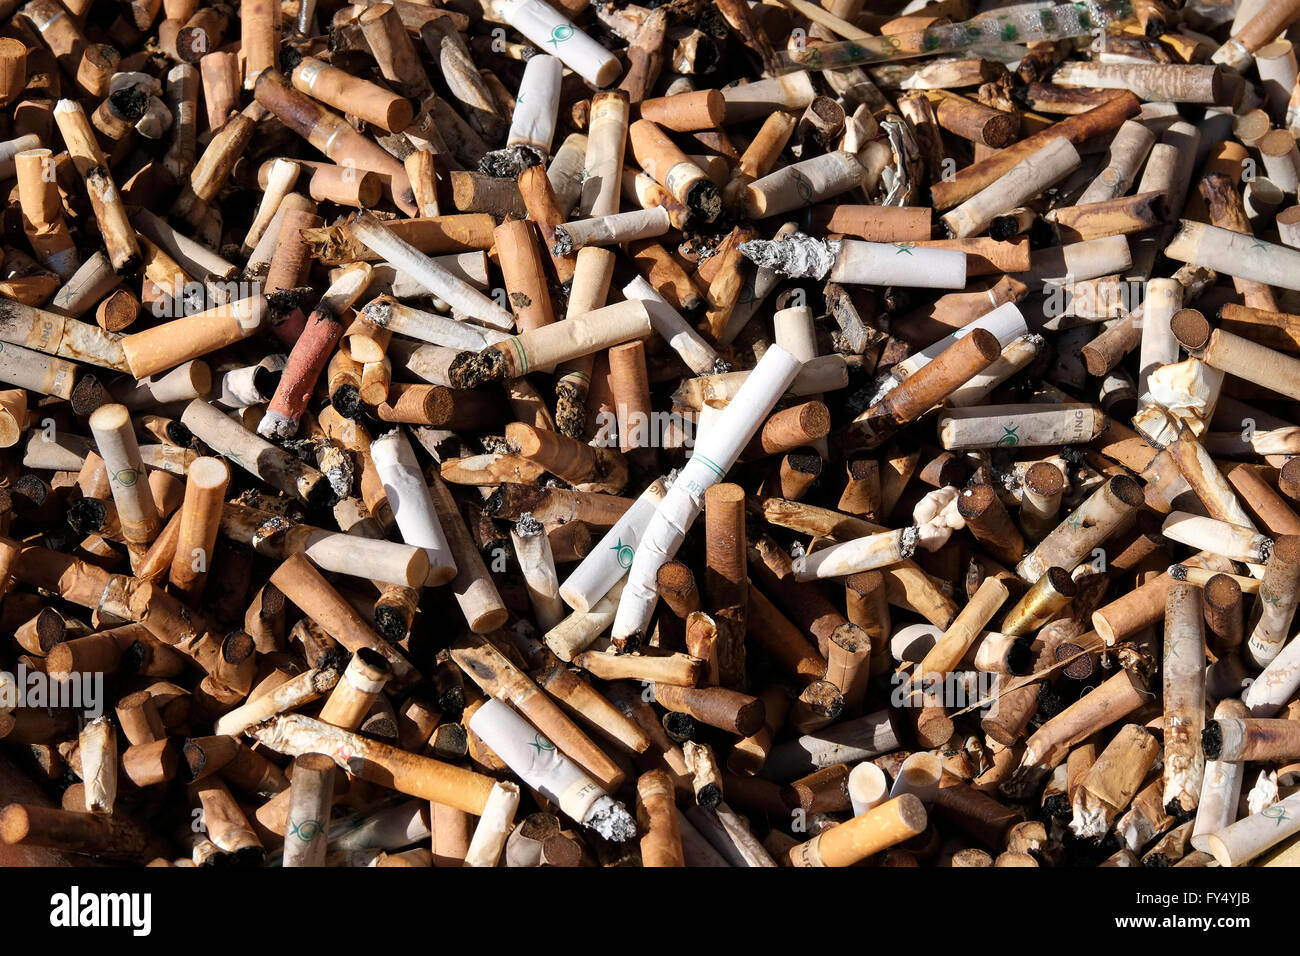 cigarette fag ends Stock Photo